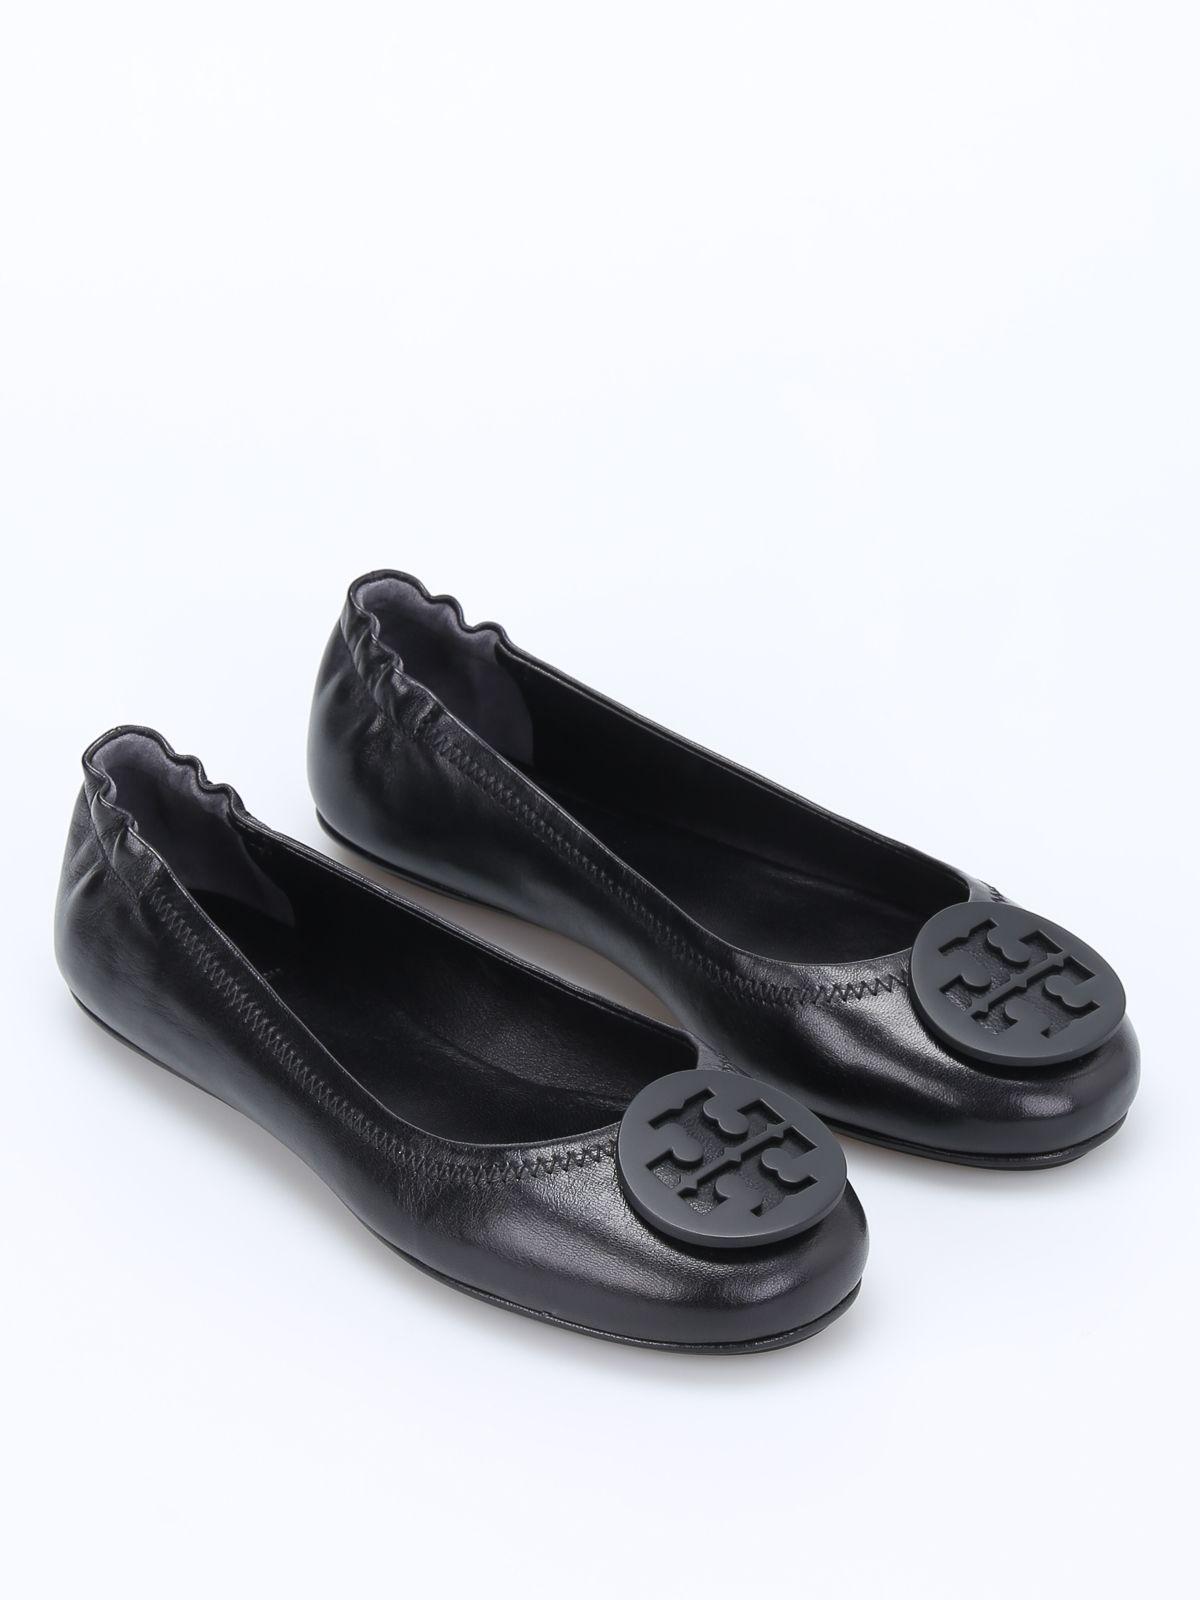 Tory Burch Black Logo - Tory Burch - Minnie logo leather ballerinas - flat shoes - 51158251001